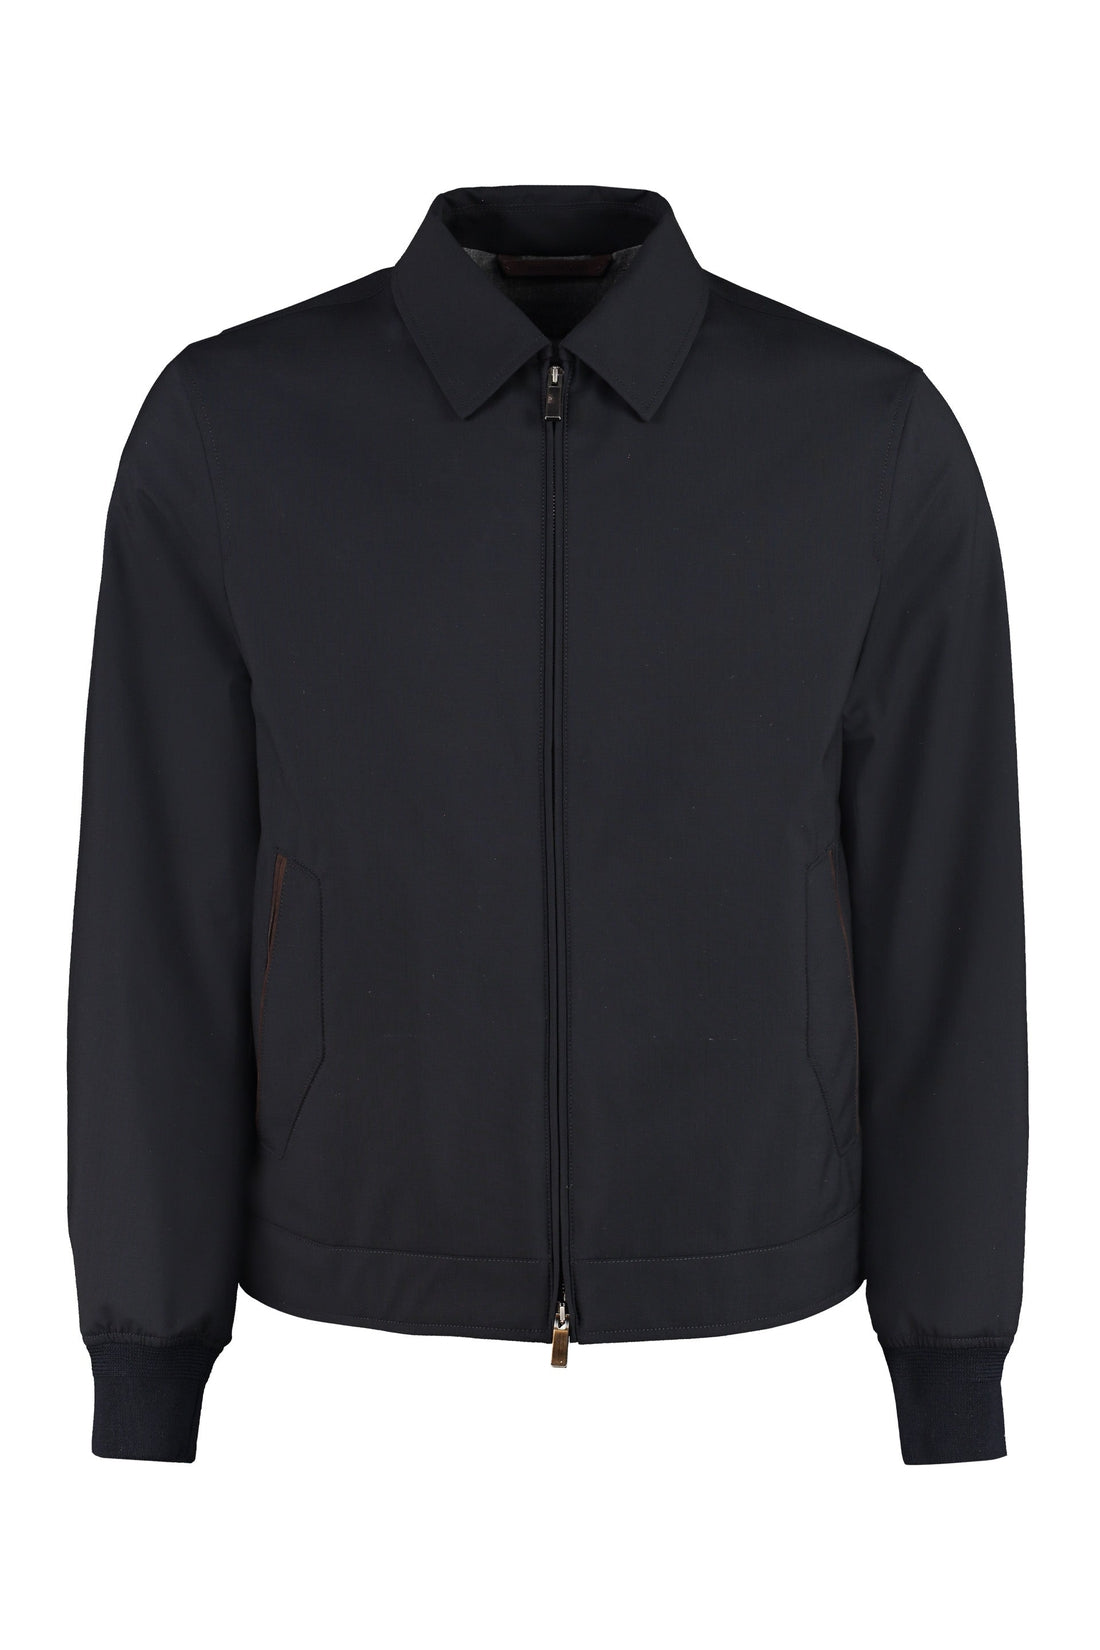 Zegna-OUTLET-SALE-Wool zipped jacket-ARCHIVIST